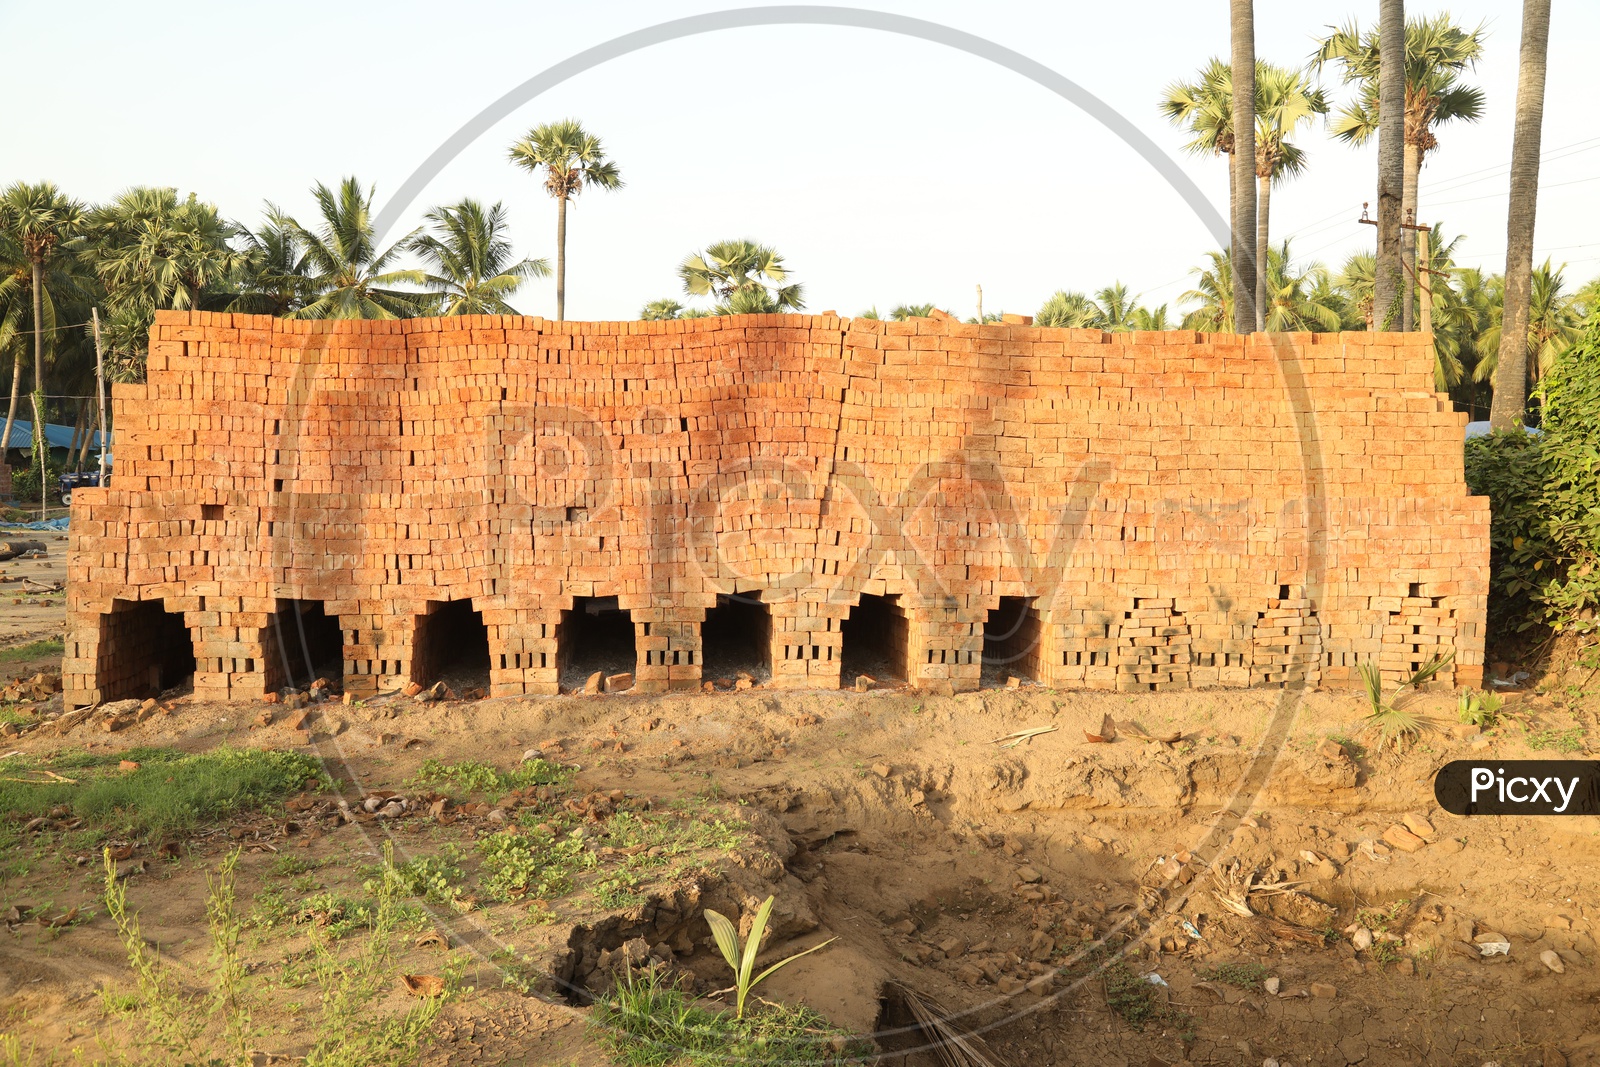 Brick Kiln in Indian Rural Villages